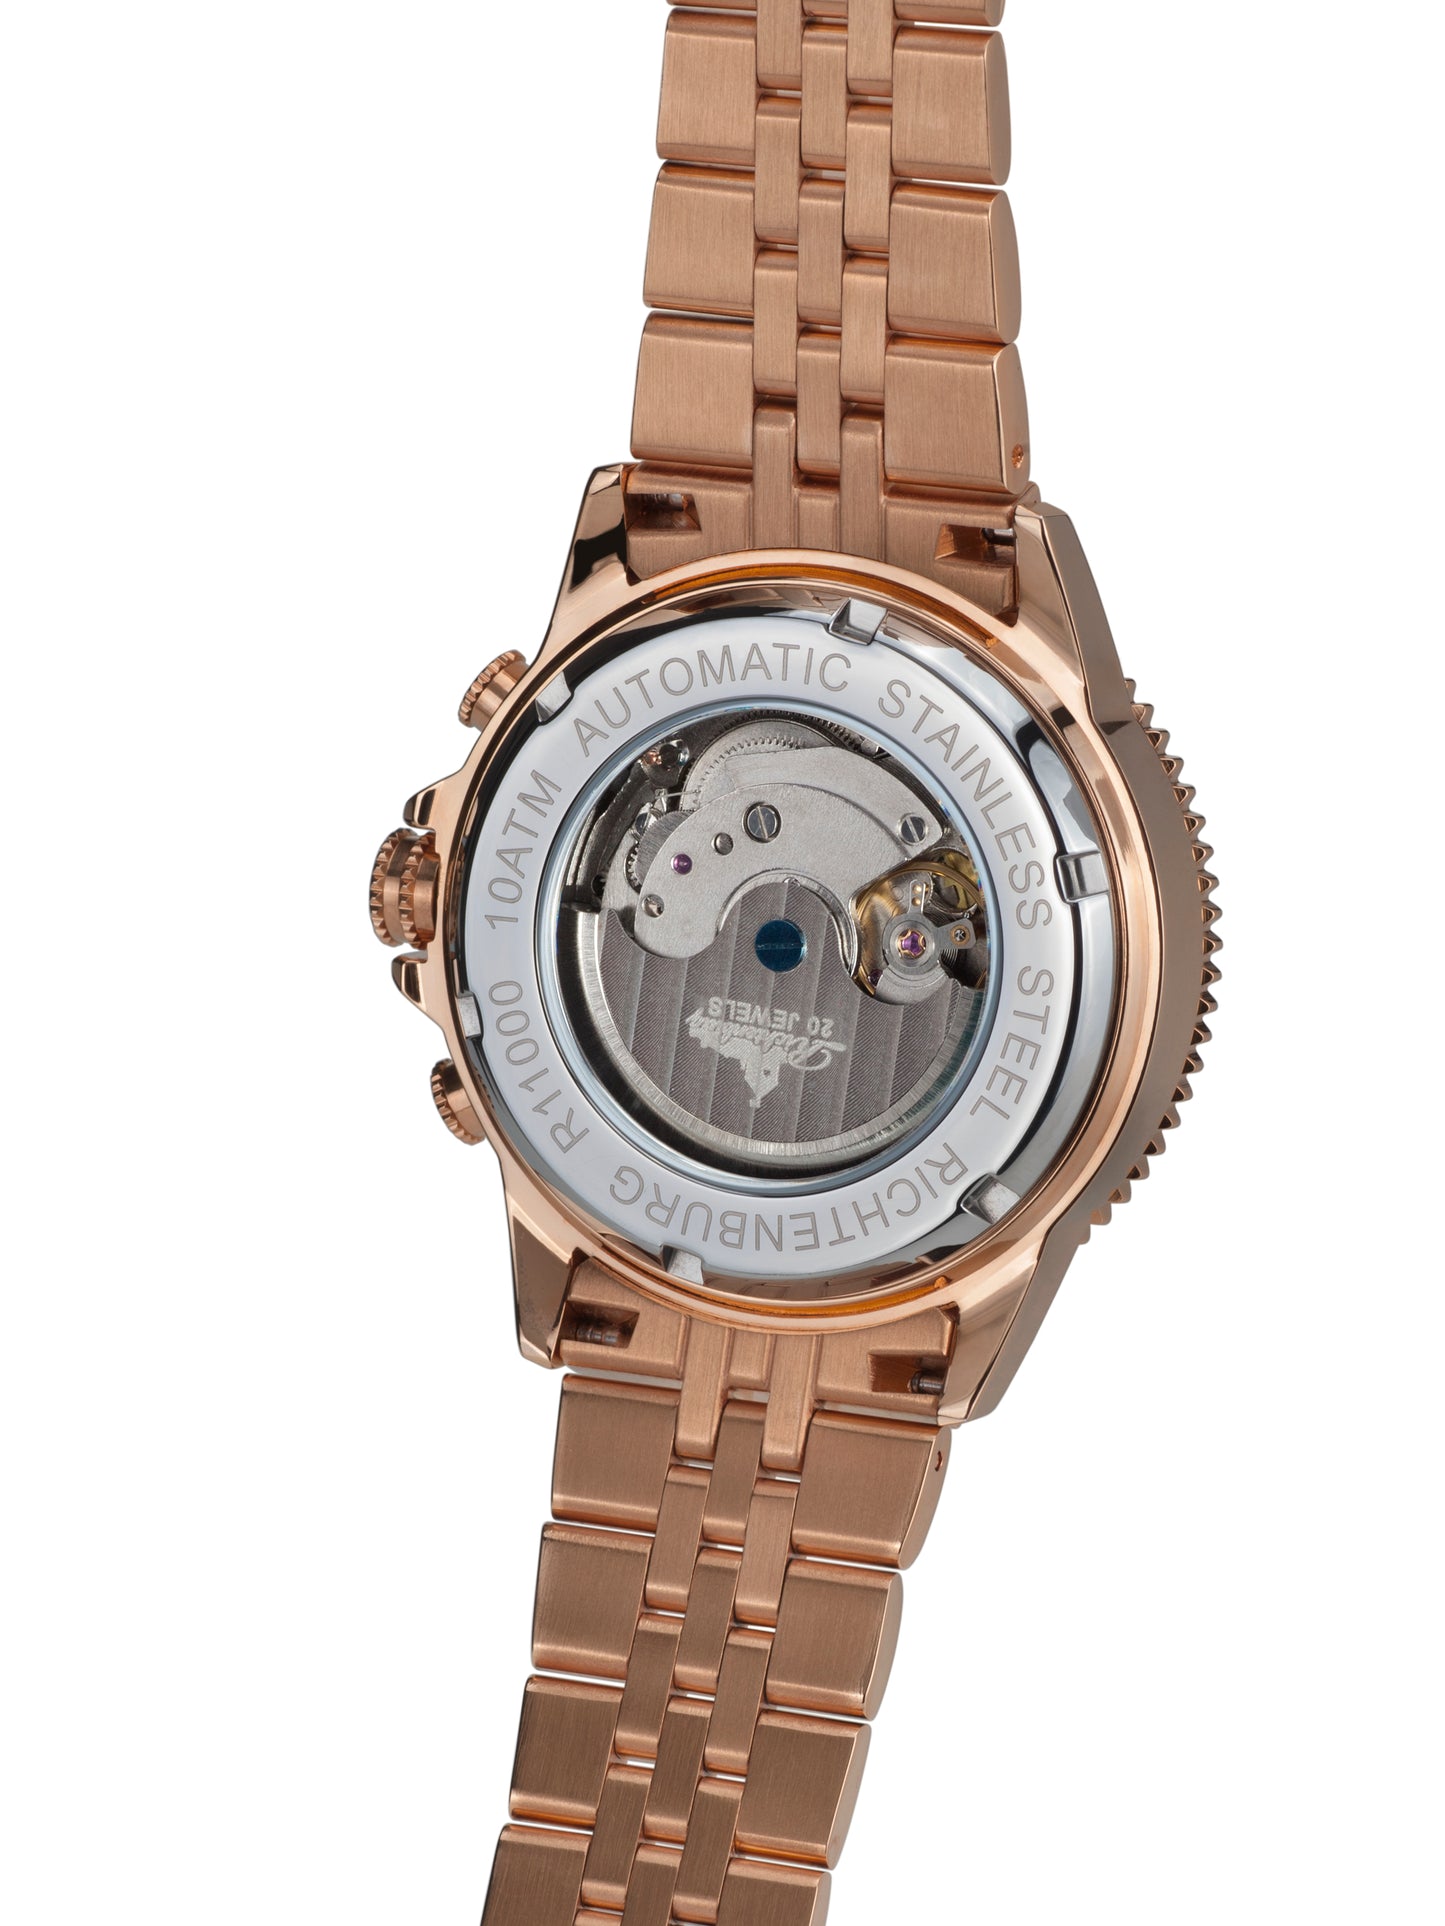 Automatic watches — Cassiopeia — Richtenburg — rosegold IP